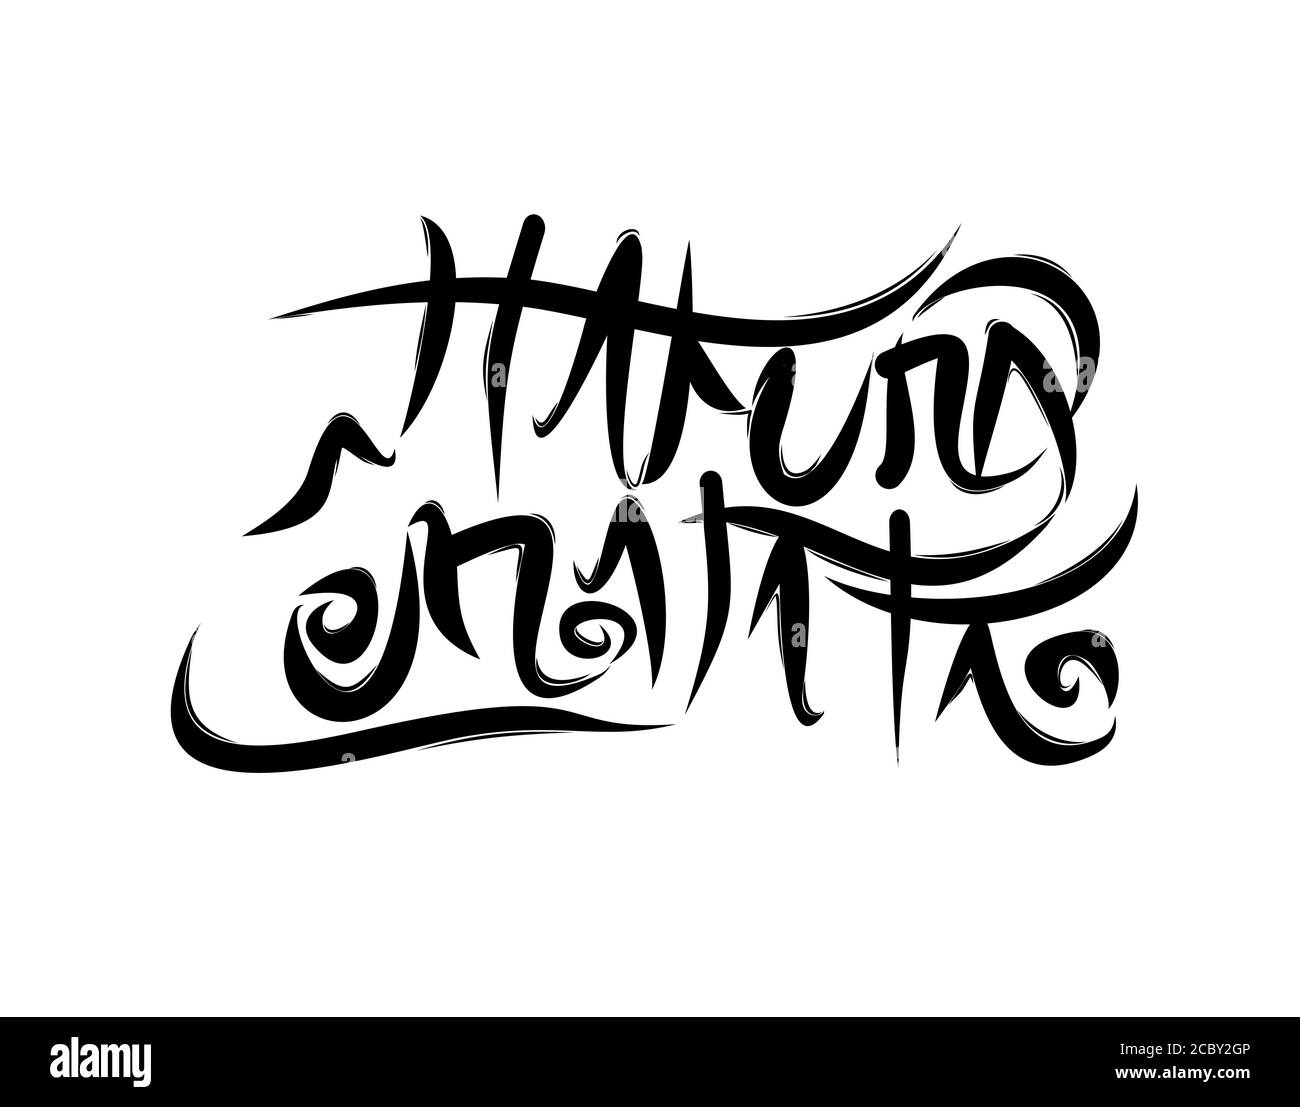 Hakuna Matata lettering text. Modern calligraphy style vector illustration. Stock Vector